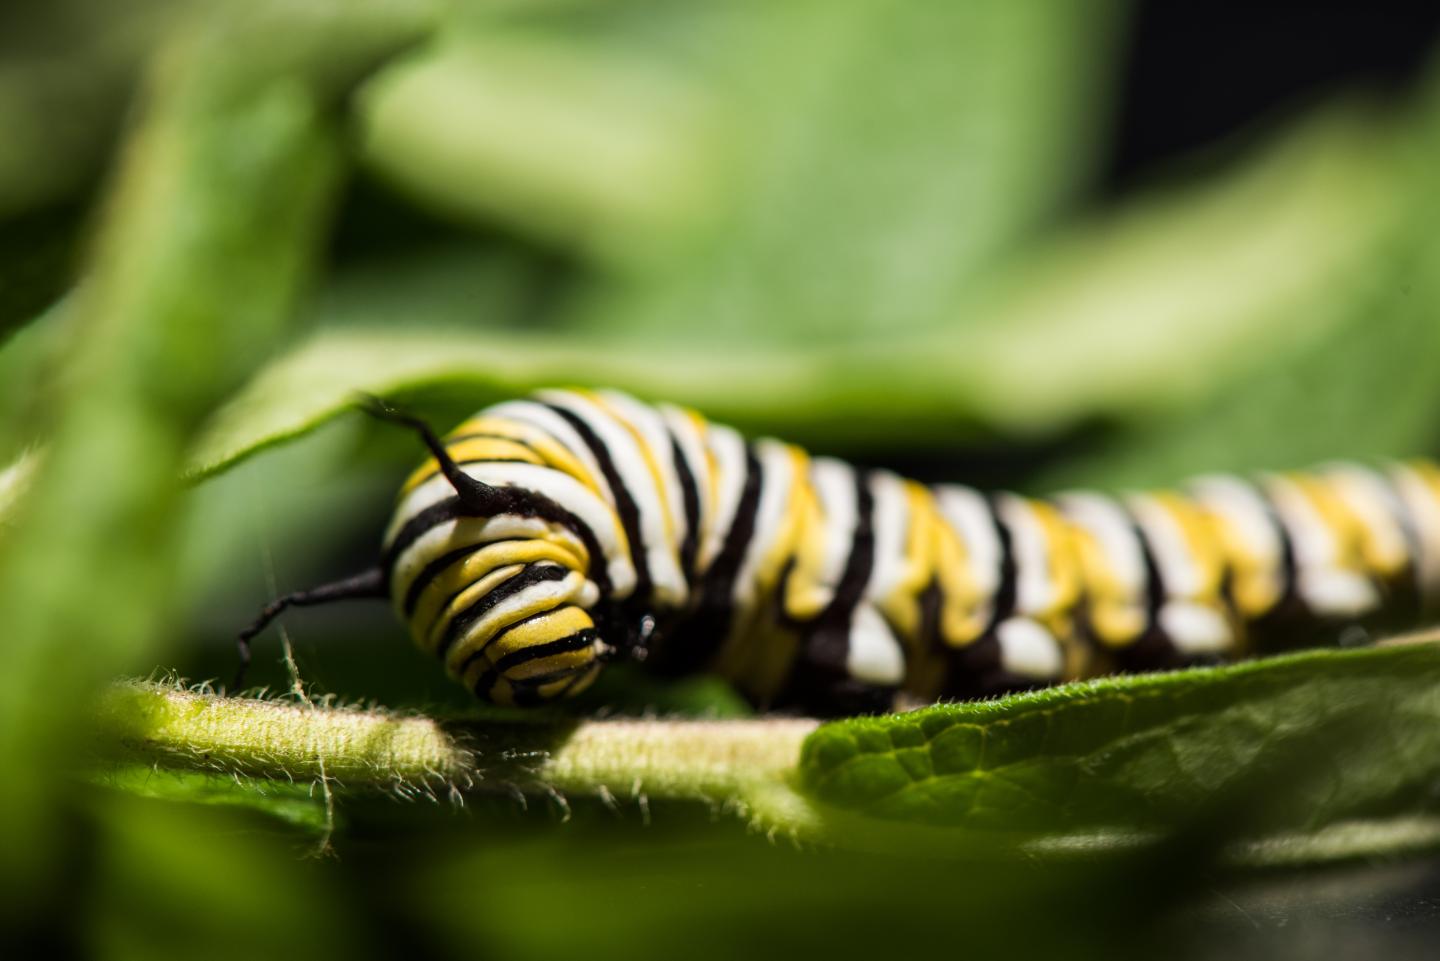 Four Biological Kingdoms Influence Disease Transmission in Monarch Butterflies